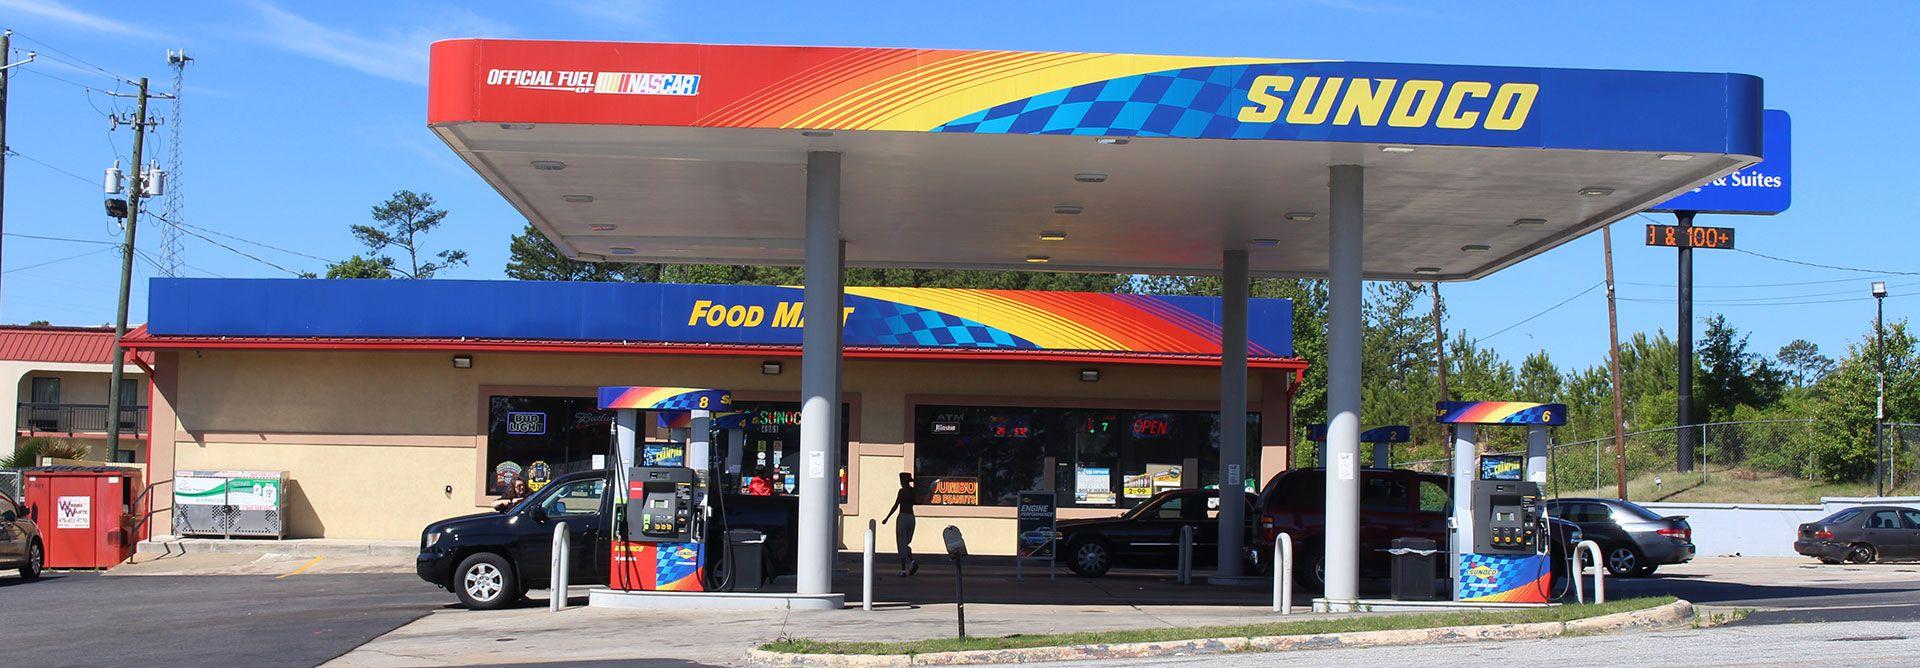 Sunoco Gas Station Logo - 7 Eleven, Sunoco Say Deal On Track